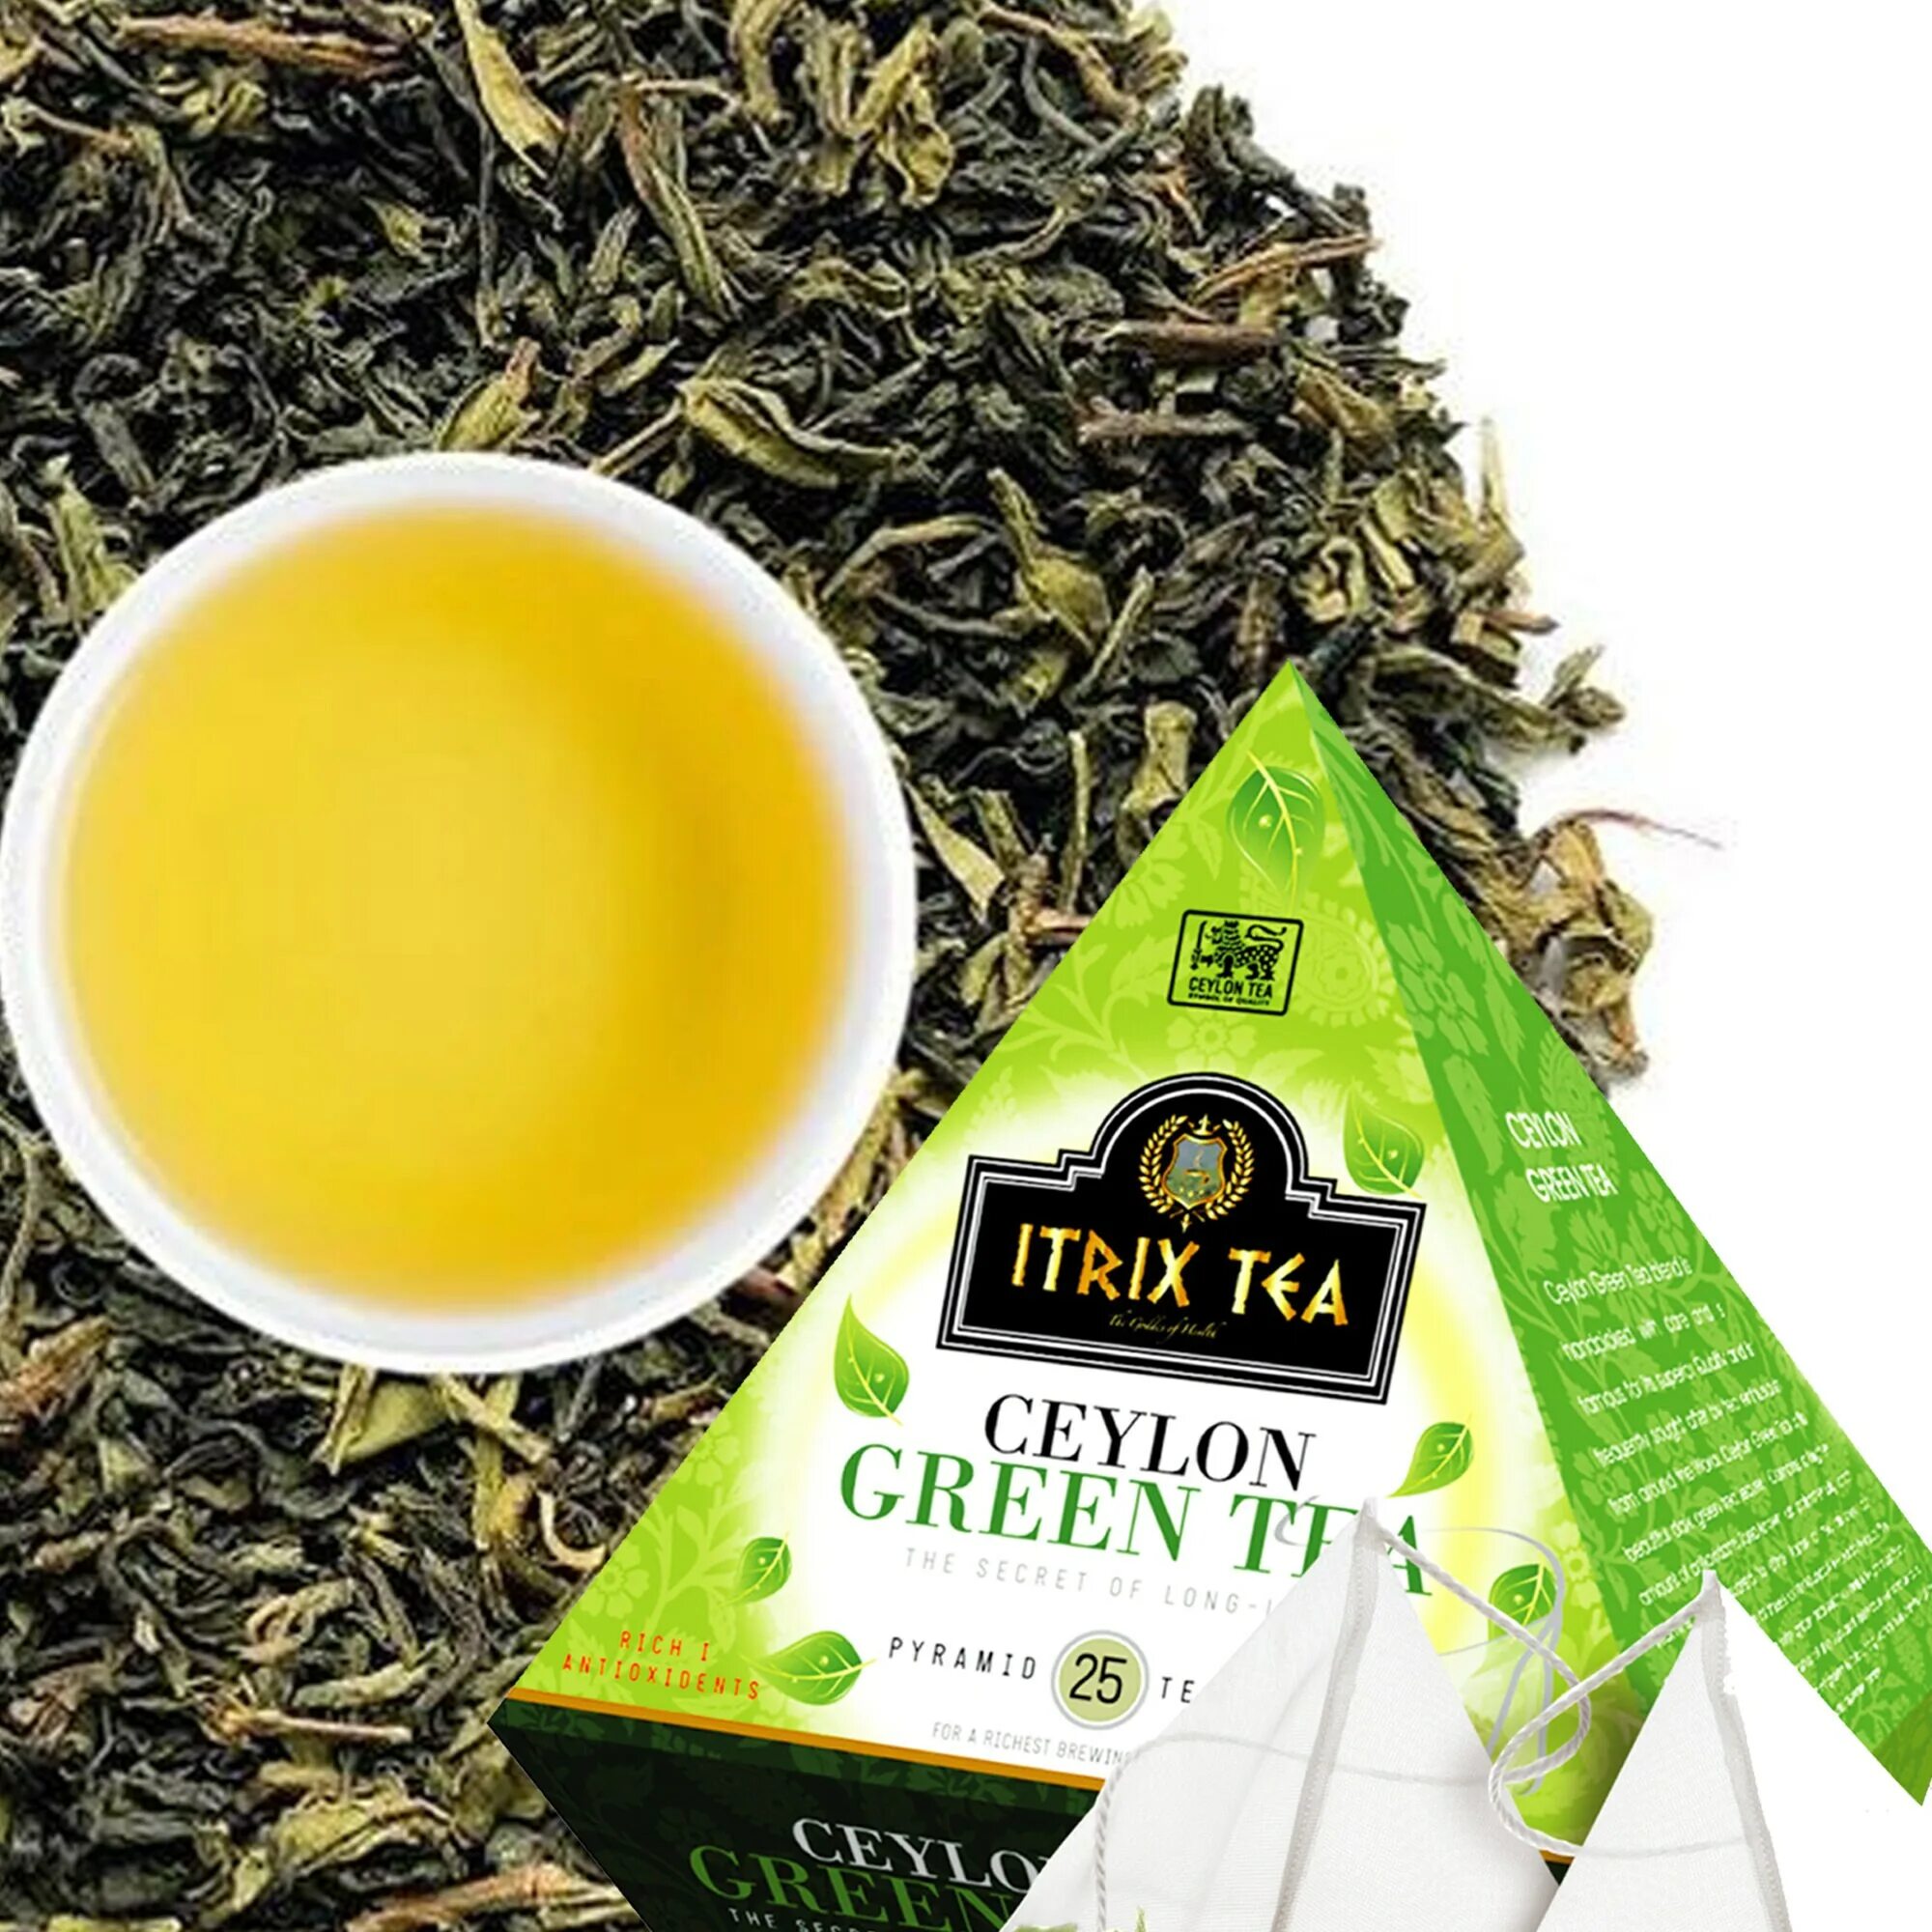 Купить хороший зеленый чай. Ceylon Tea Green чай. Греен чай цейлонский Green Tea. Хербал чай зеленый. Органический зеленый чай.